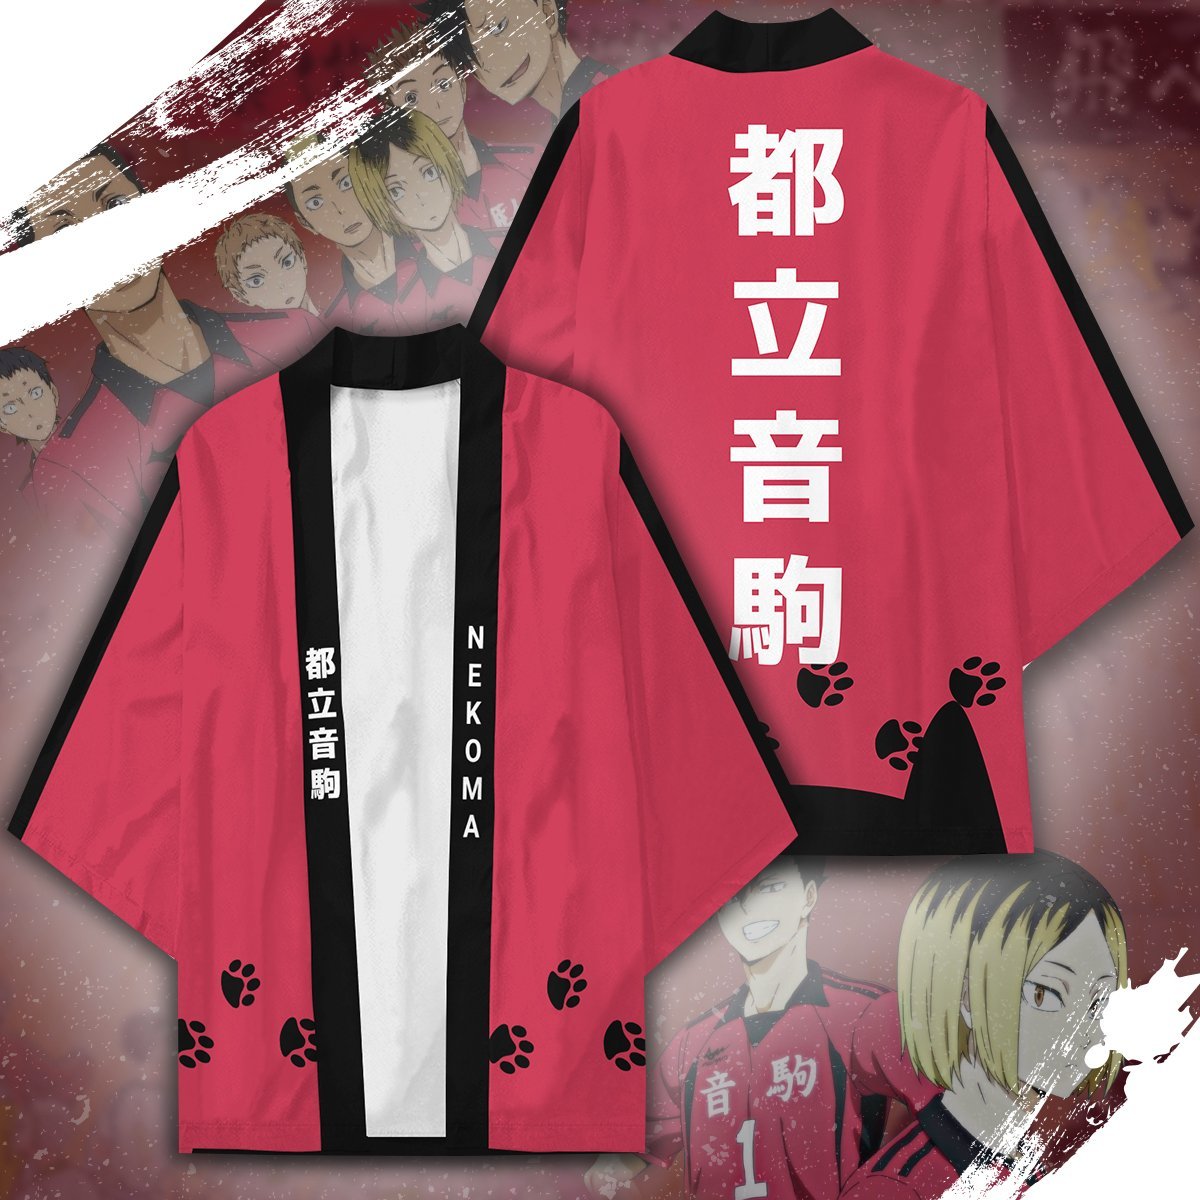 nekoma high cats kimono 807370 - Otaku Treat